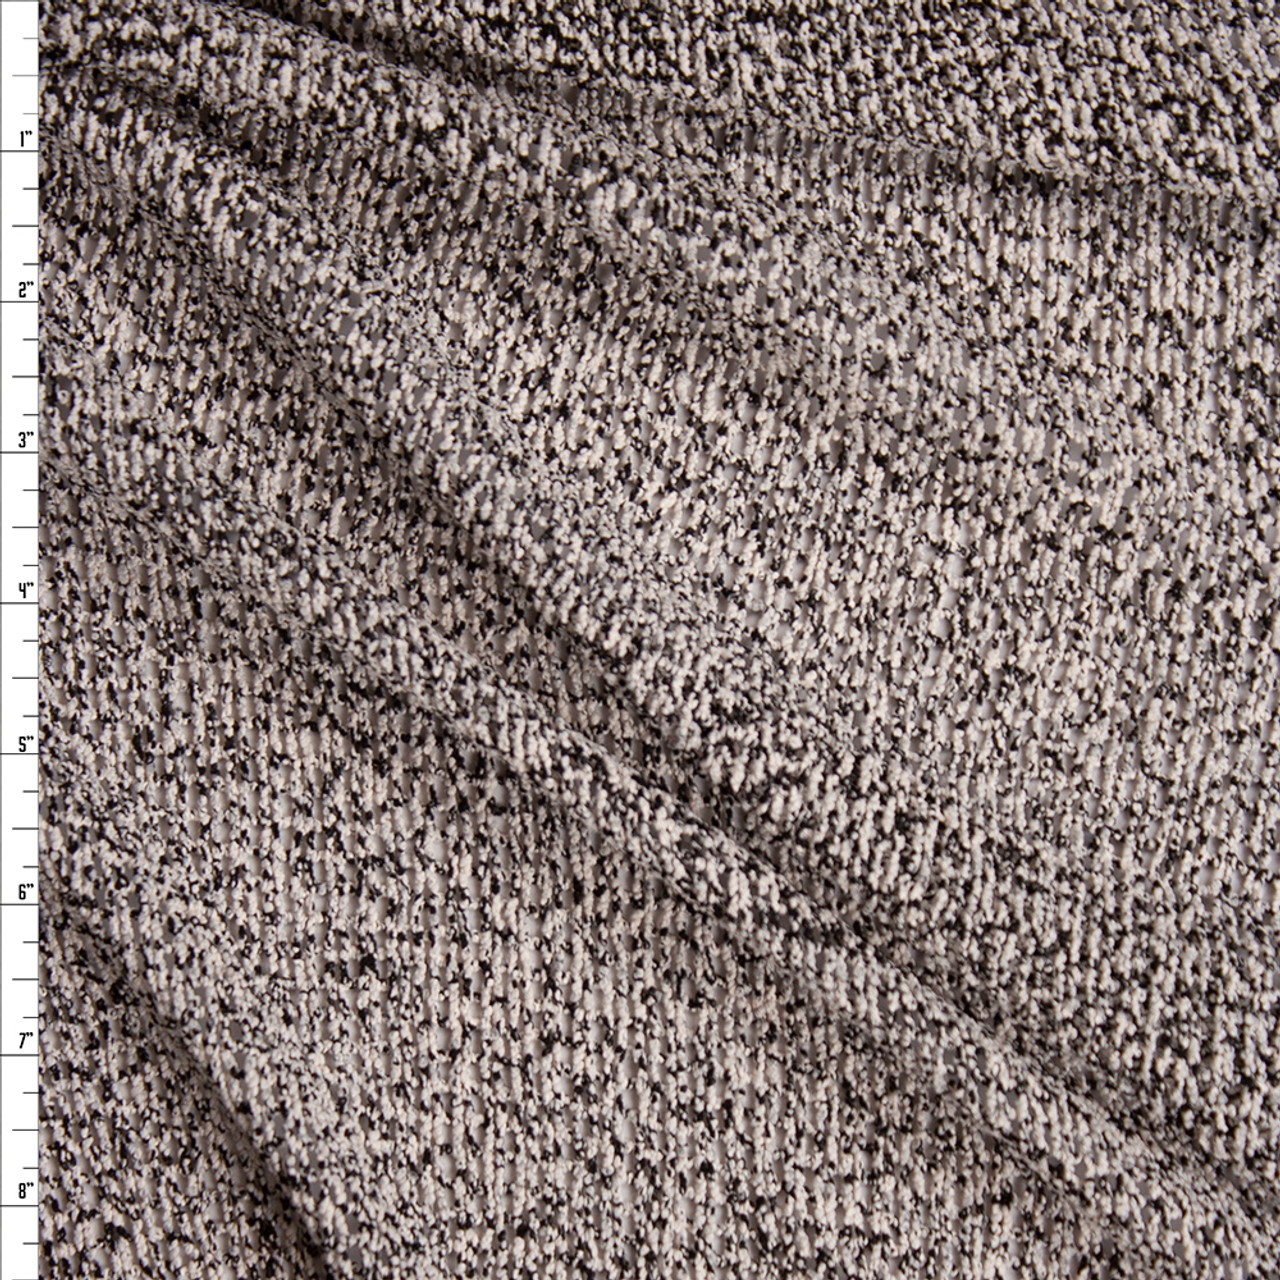 Cali Fabrics Black Loose Knit Lightweight Sweater Knit Fabric by the Yard